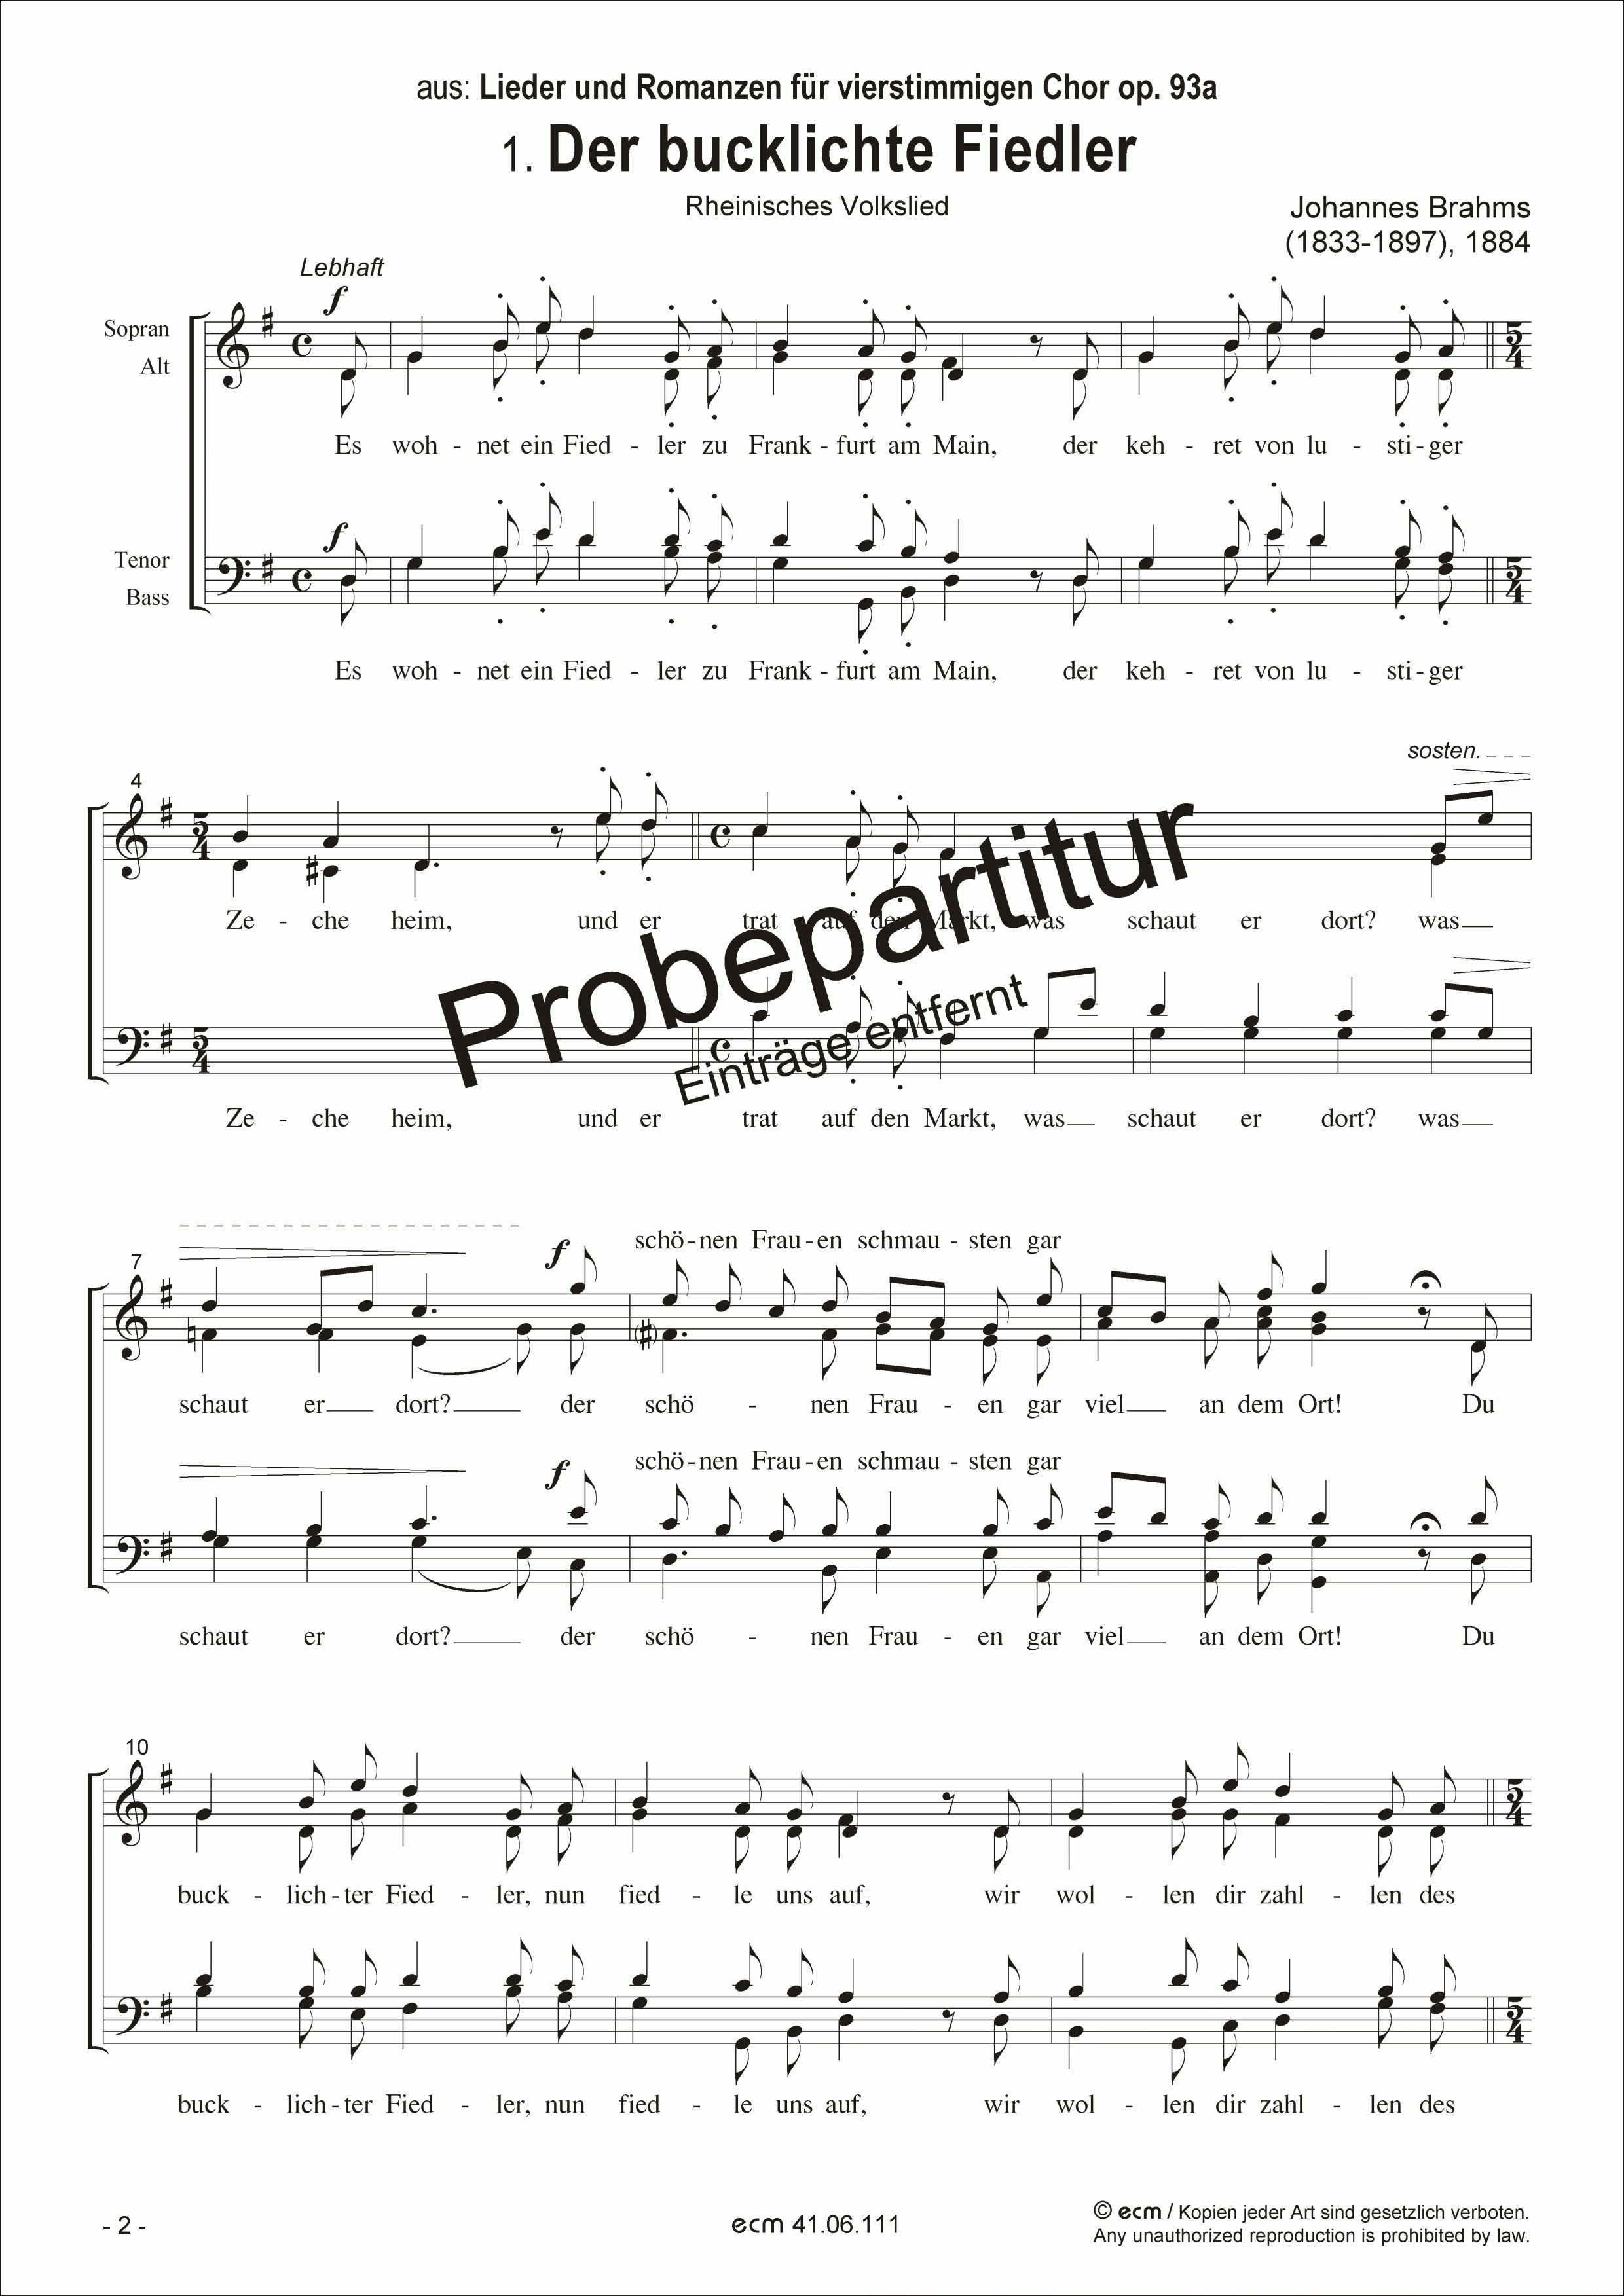 Der bucklichte Fiedler (op.93a, No.1)